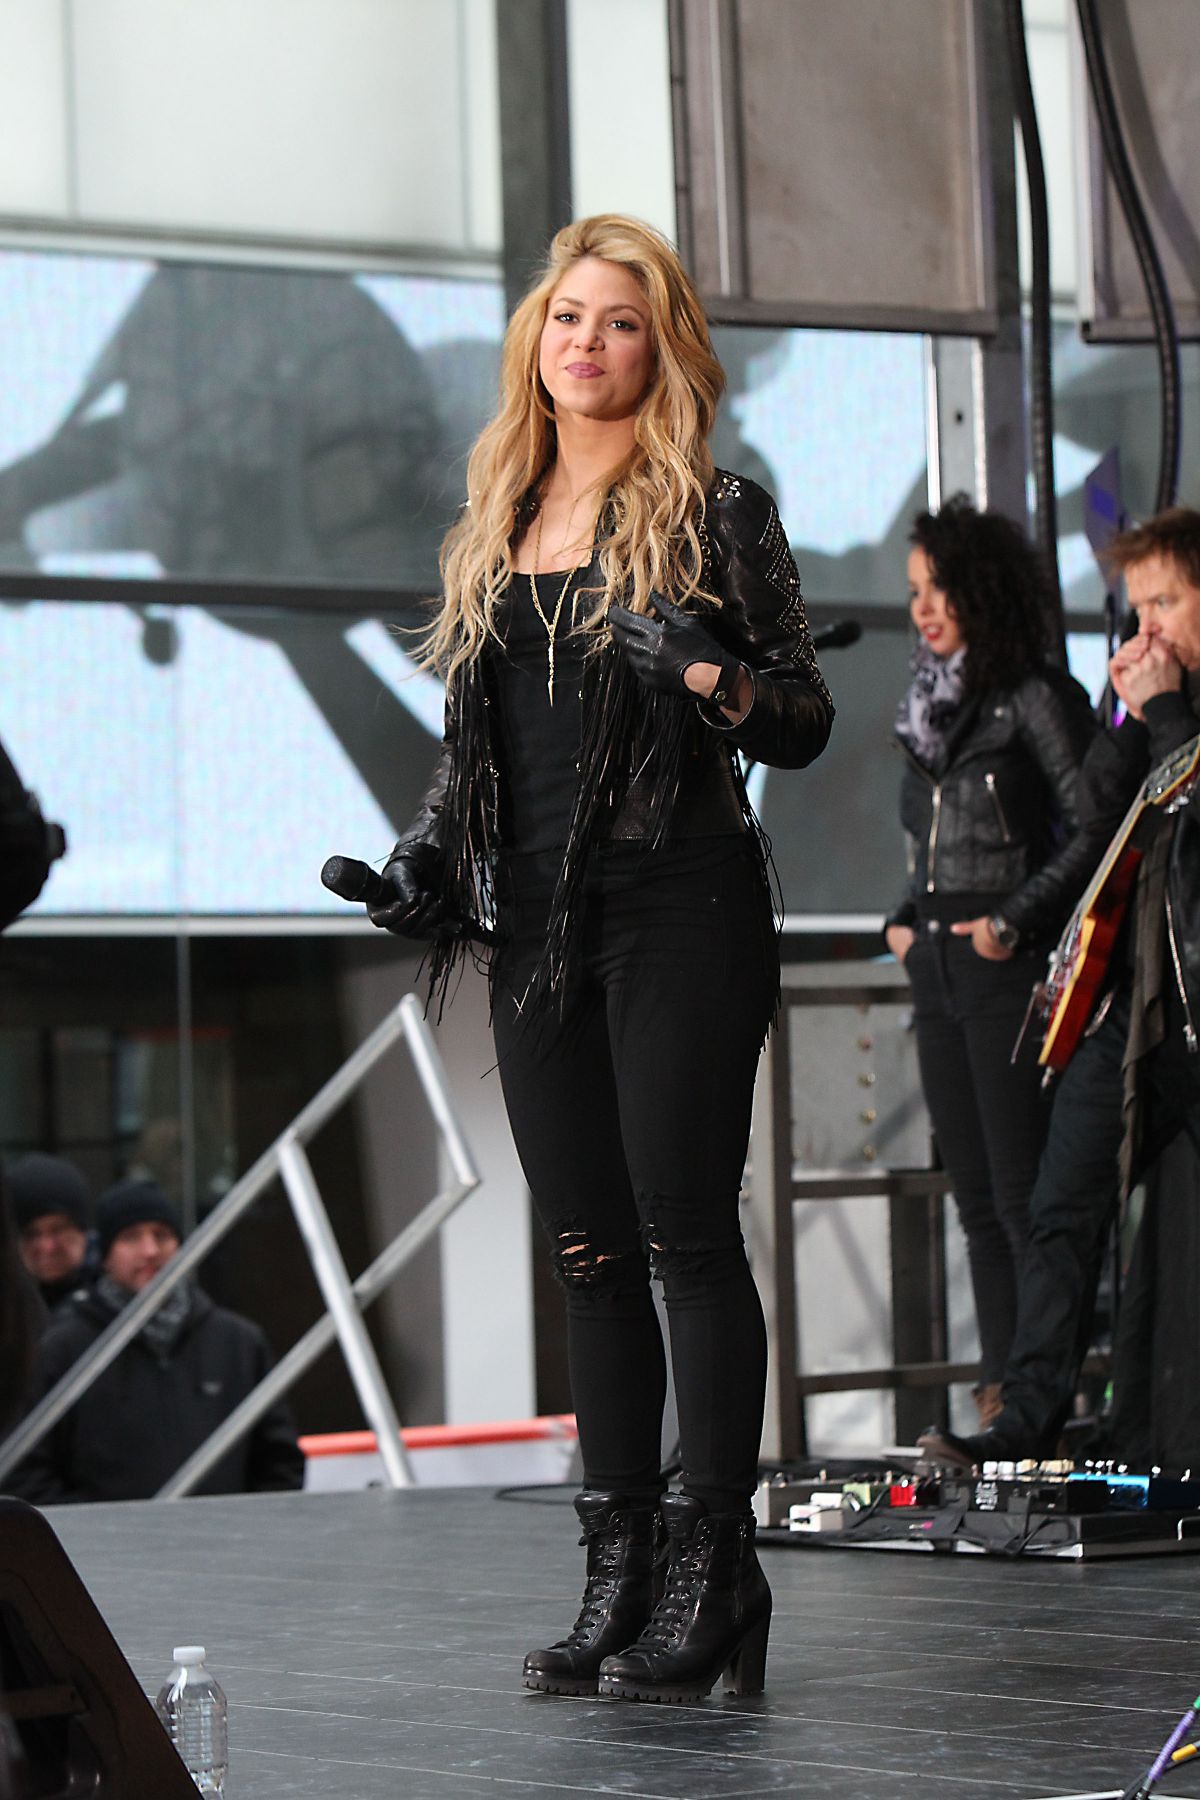 Shakira today